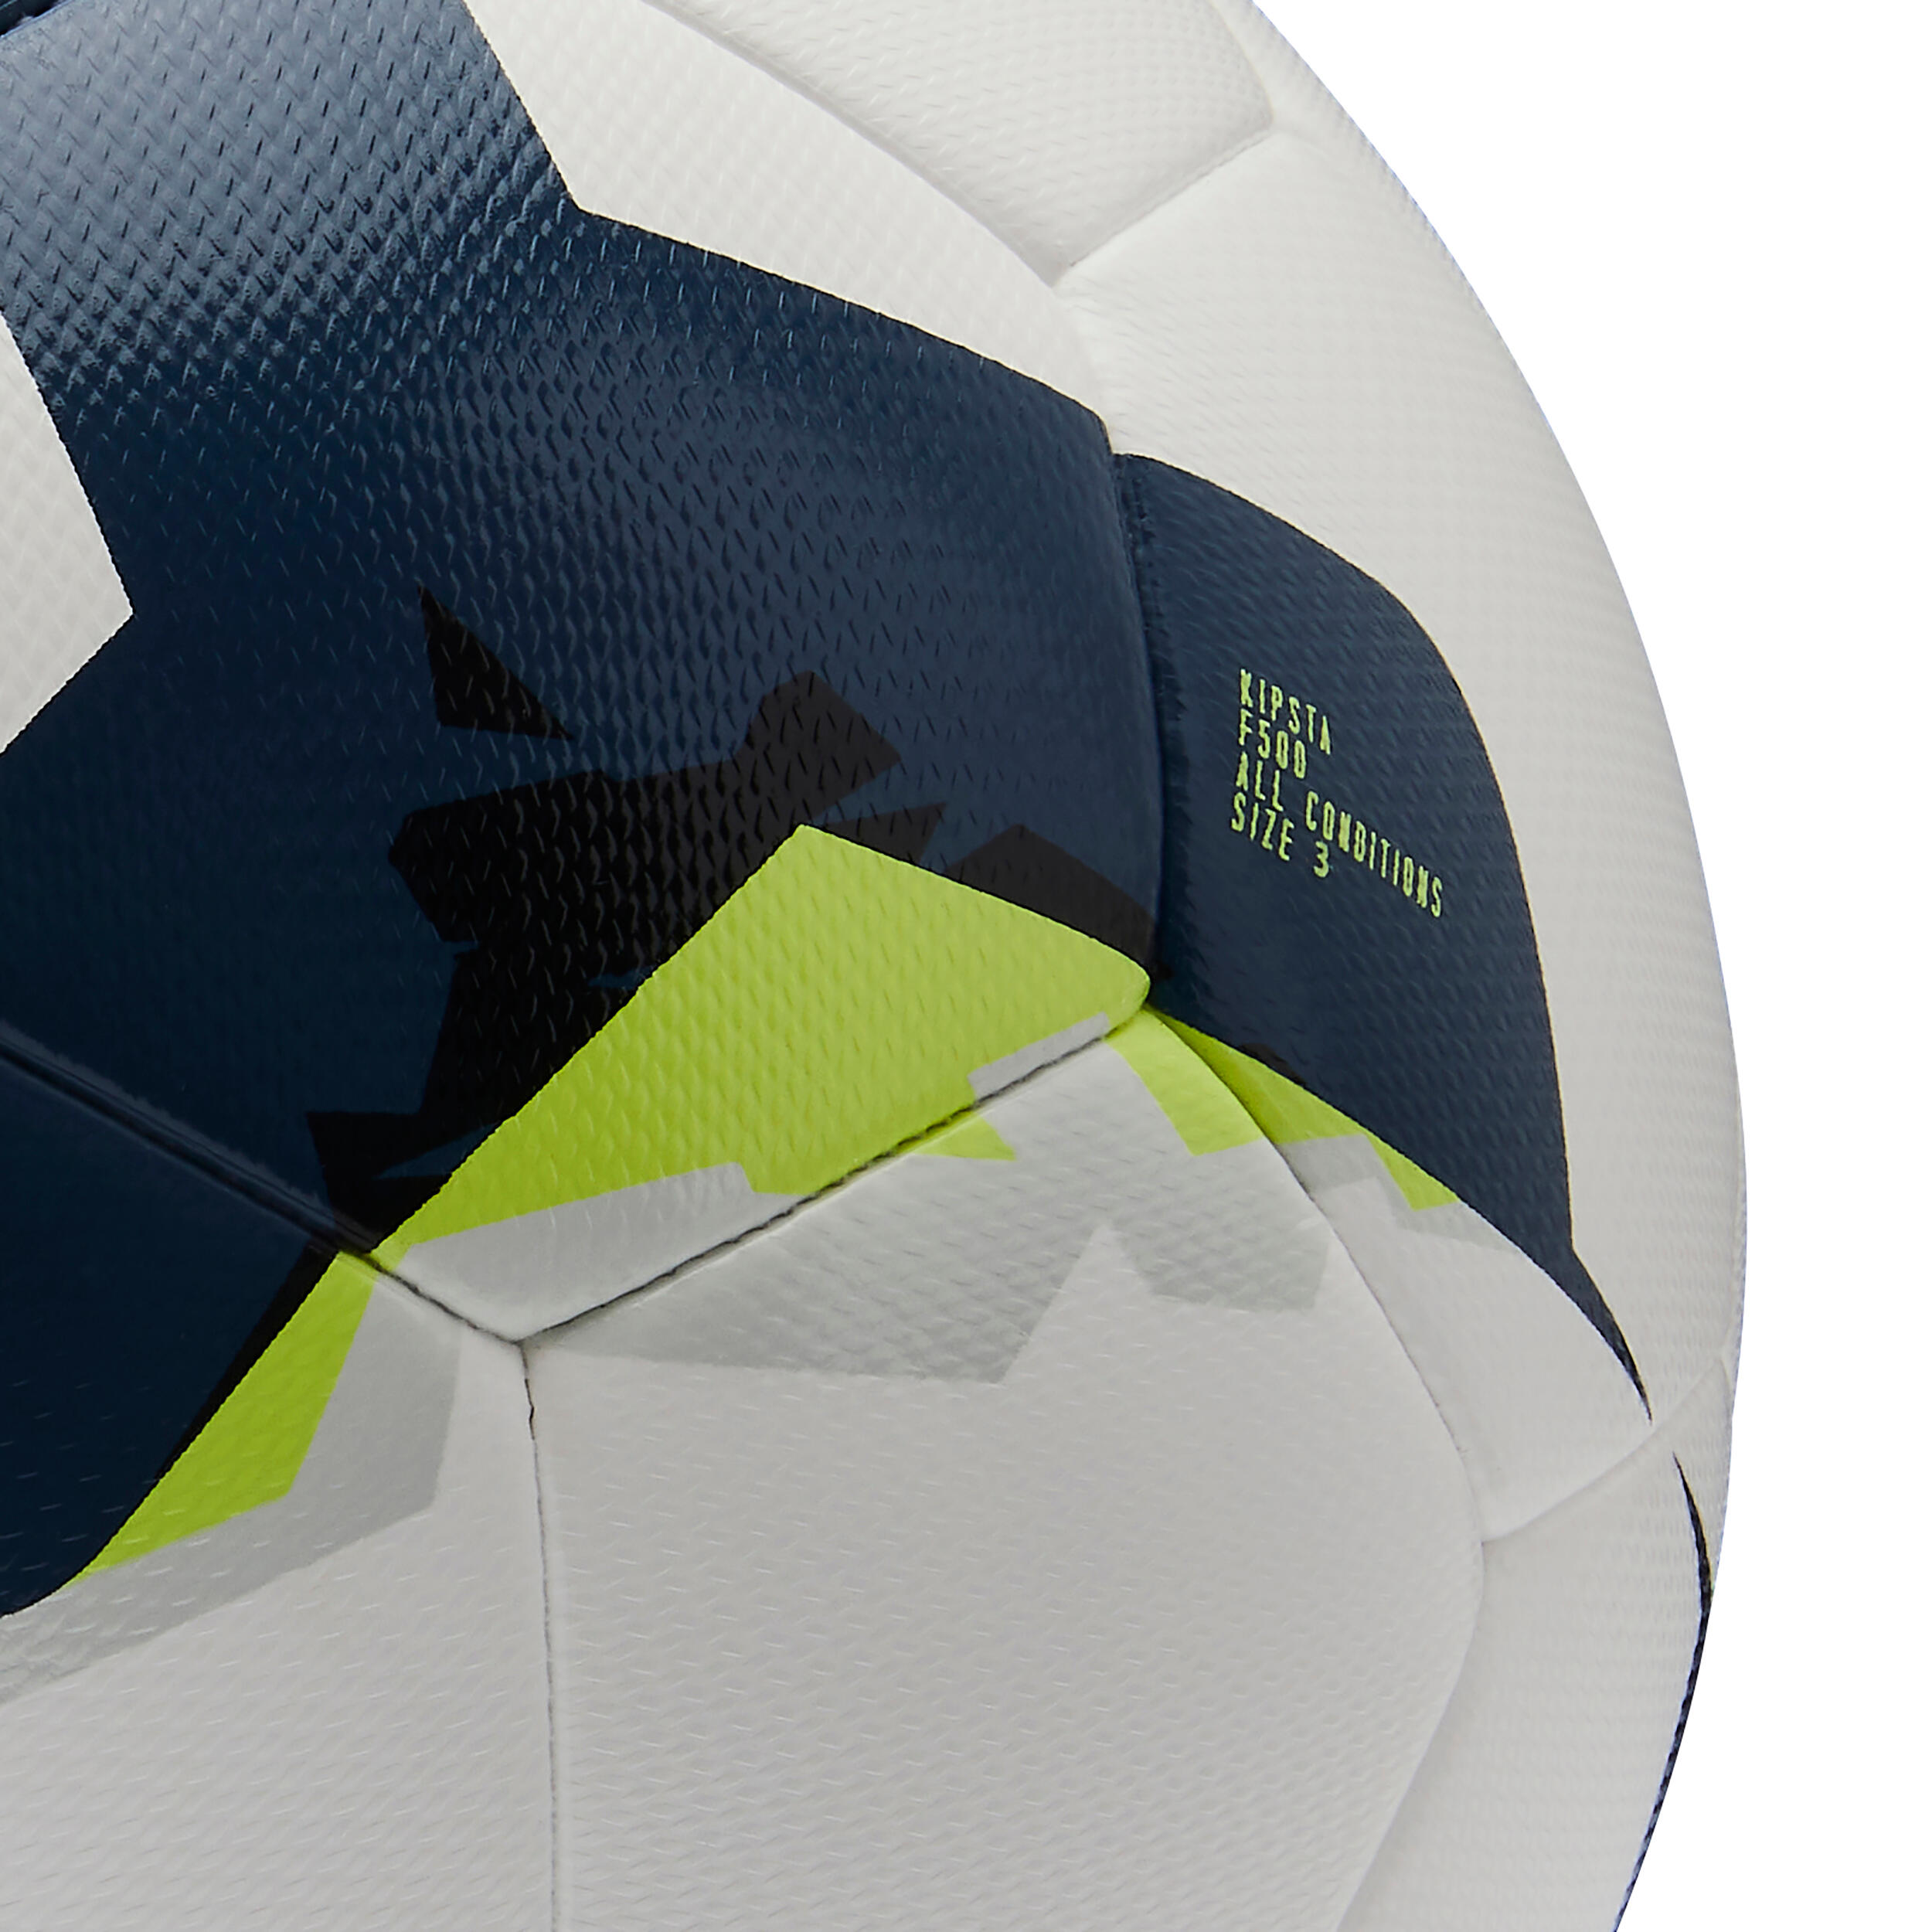 F 500 hybrid soccer ball size 3 - KIPSTA